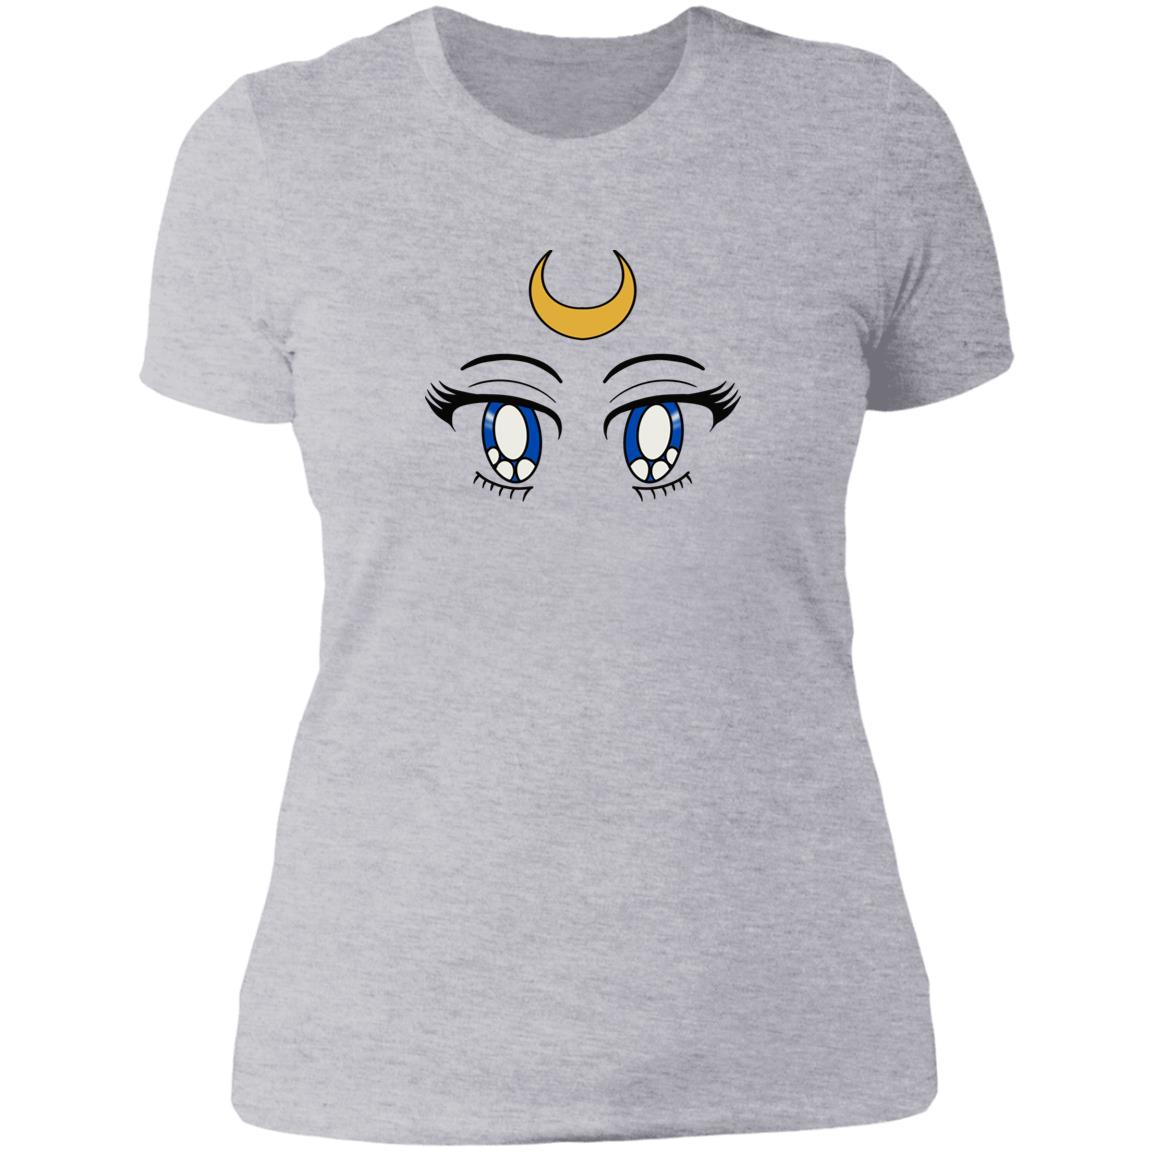 Enchanting Elegance: Captivating Sailor Moon Shirt with Mesmerizing Blue Eyes and Celestial Crescent Moon